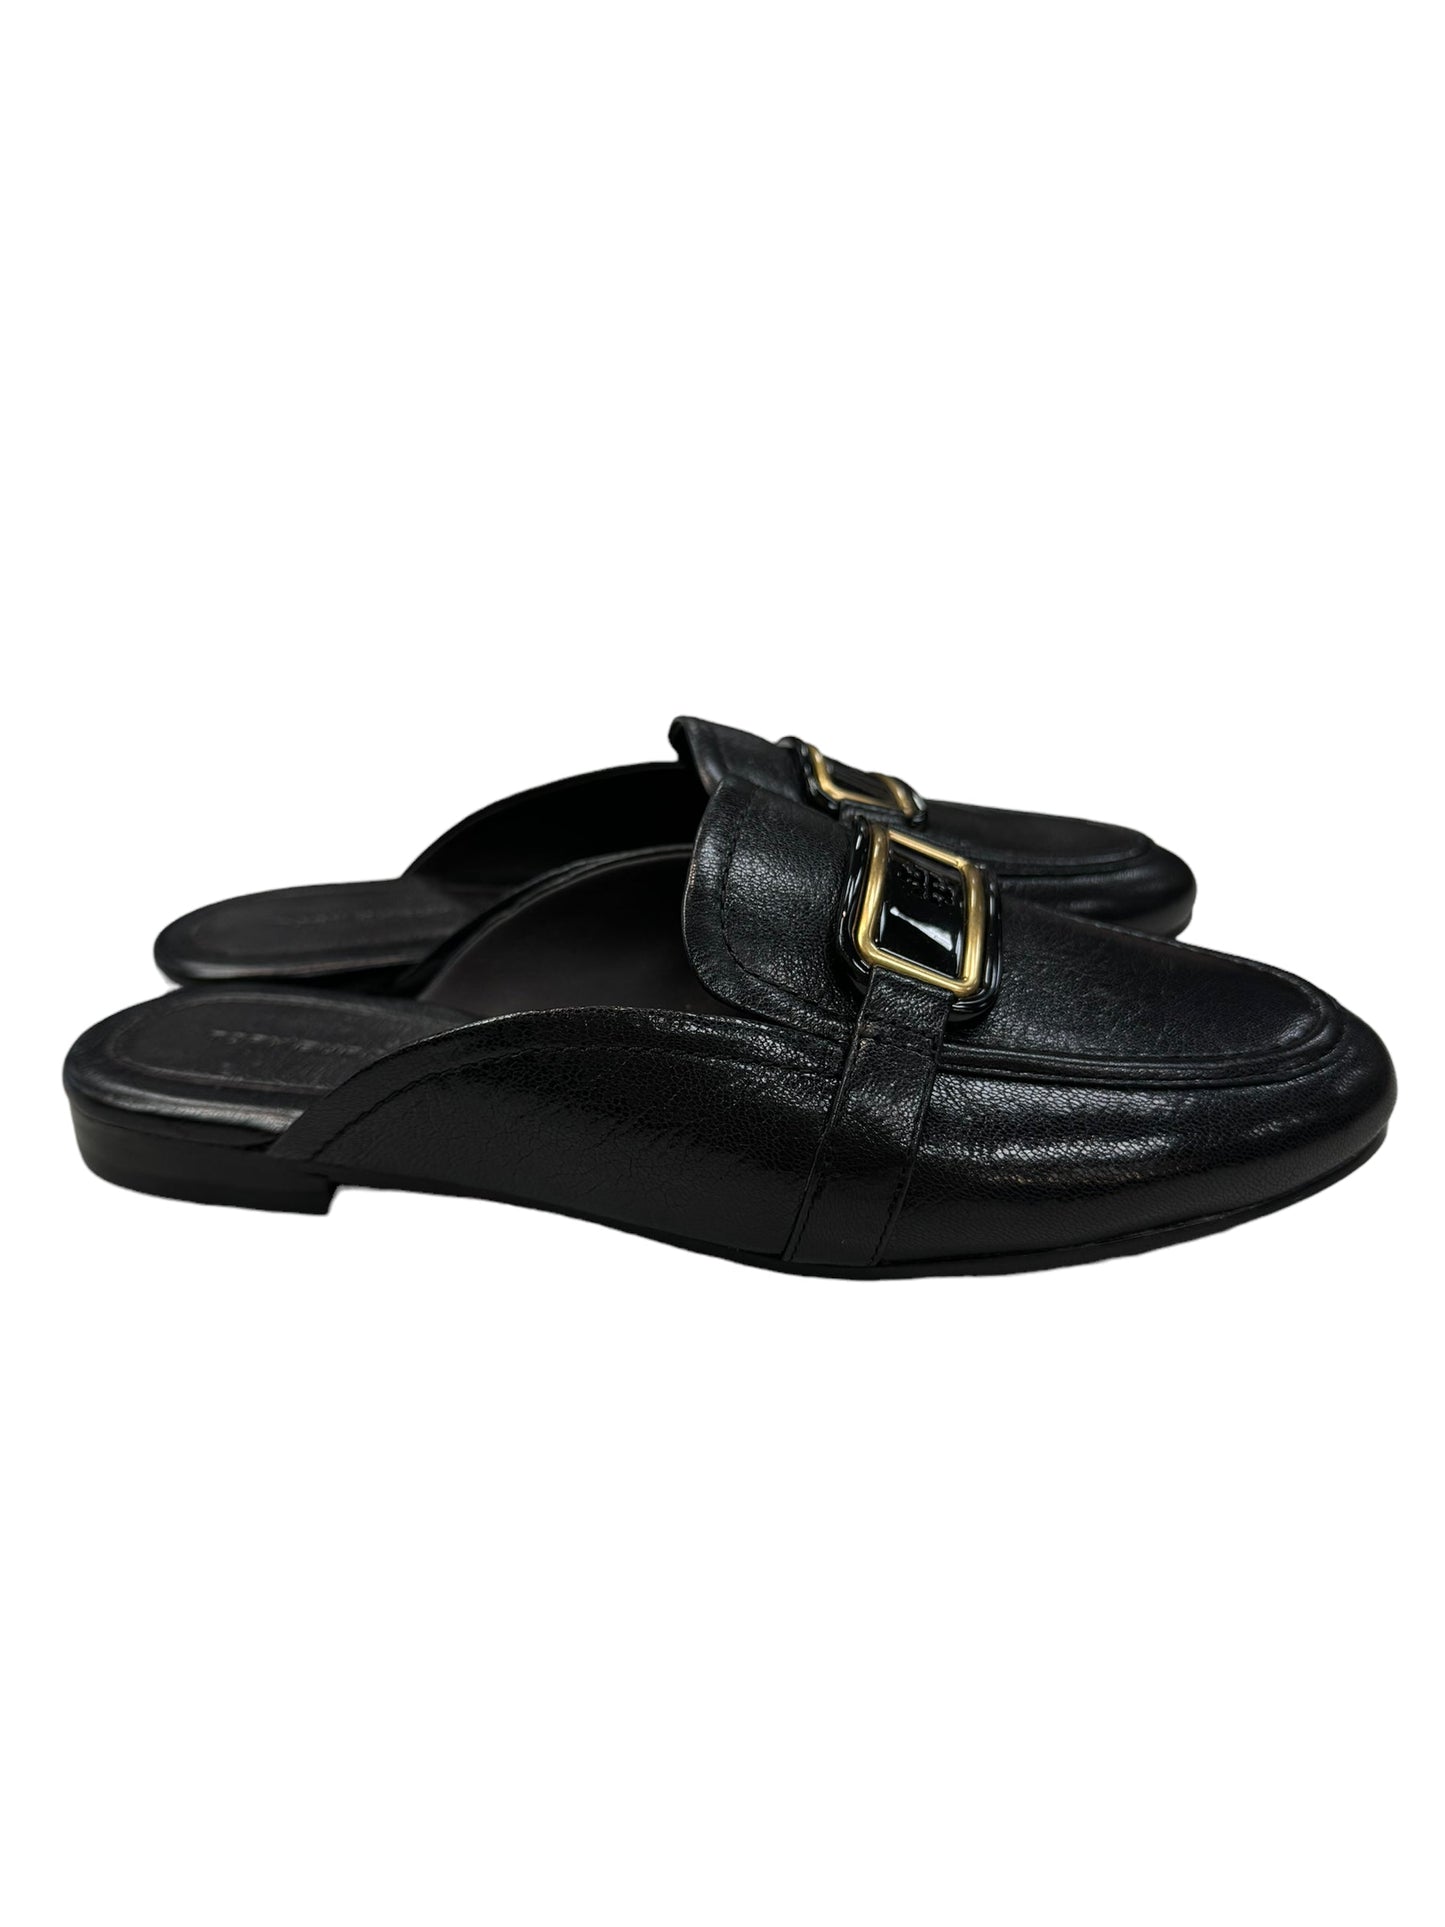 Black Shoes Designer Tory Burch, Size 7.5